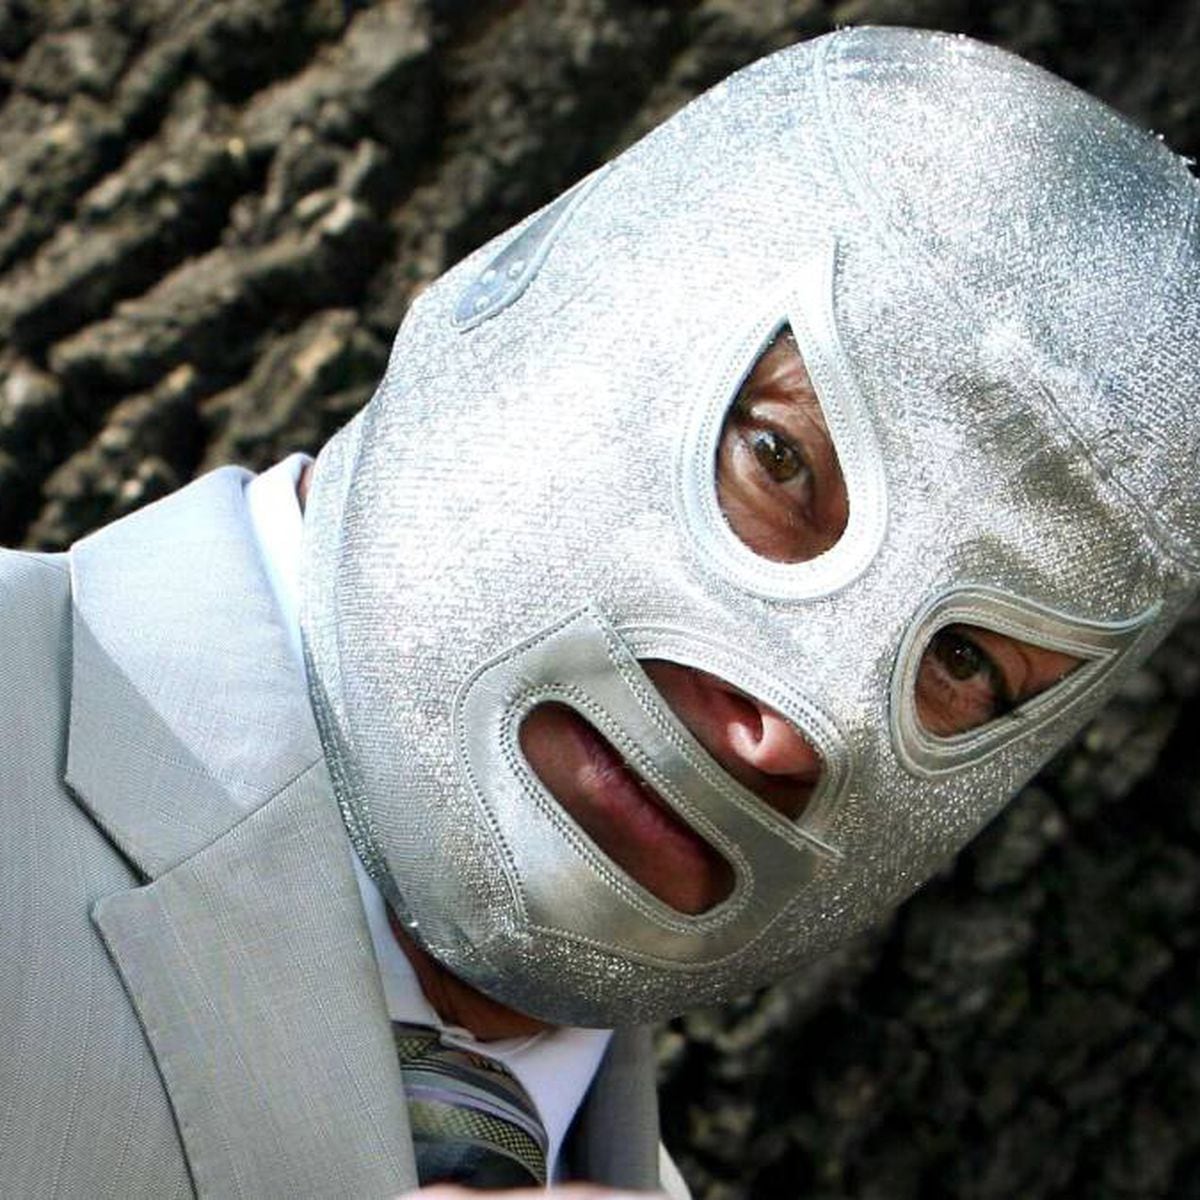 mascaras de luchadores mexicanos originales